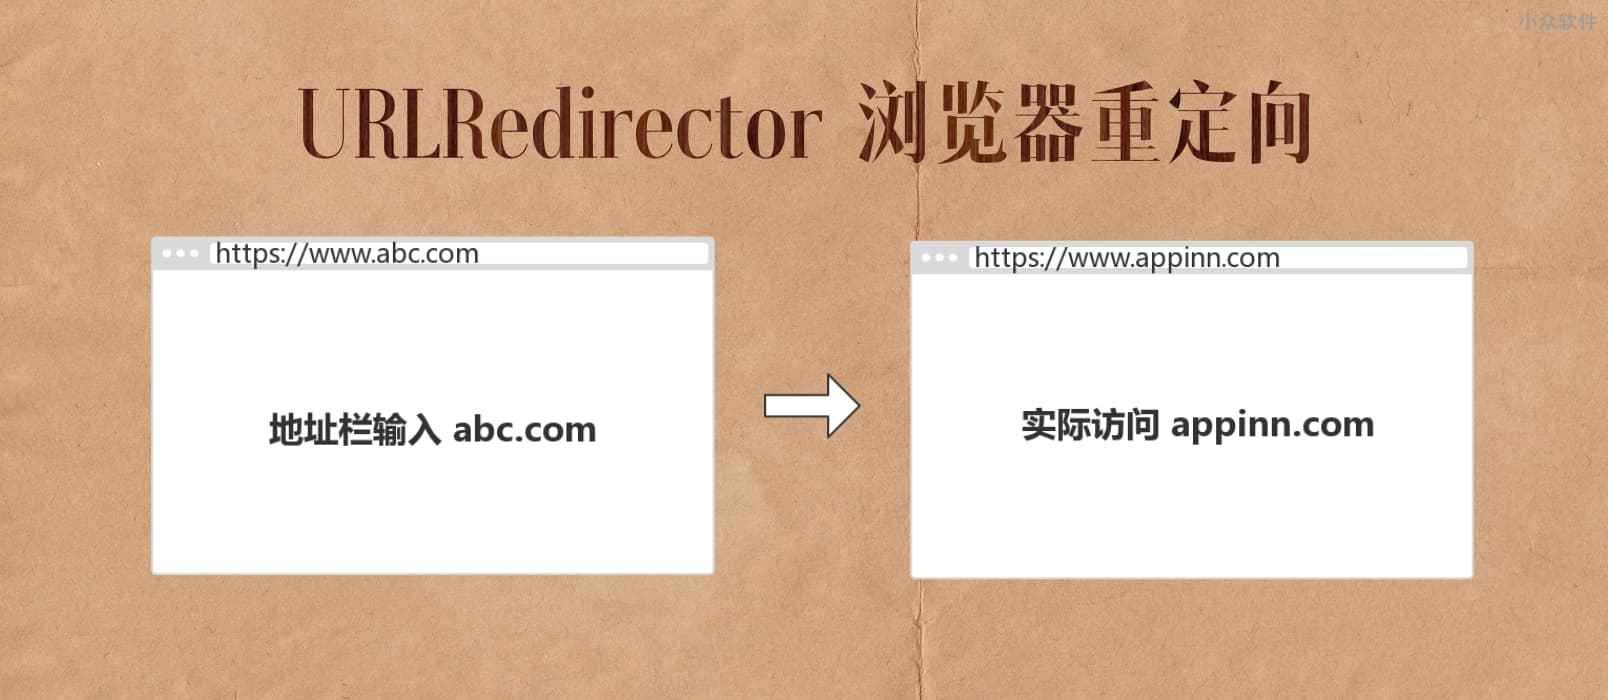 URLRedirector – 网址重定向，解决网站打开慢的顽疾 [Chrome/Firefox/Edge]